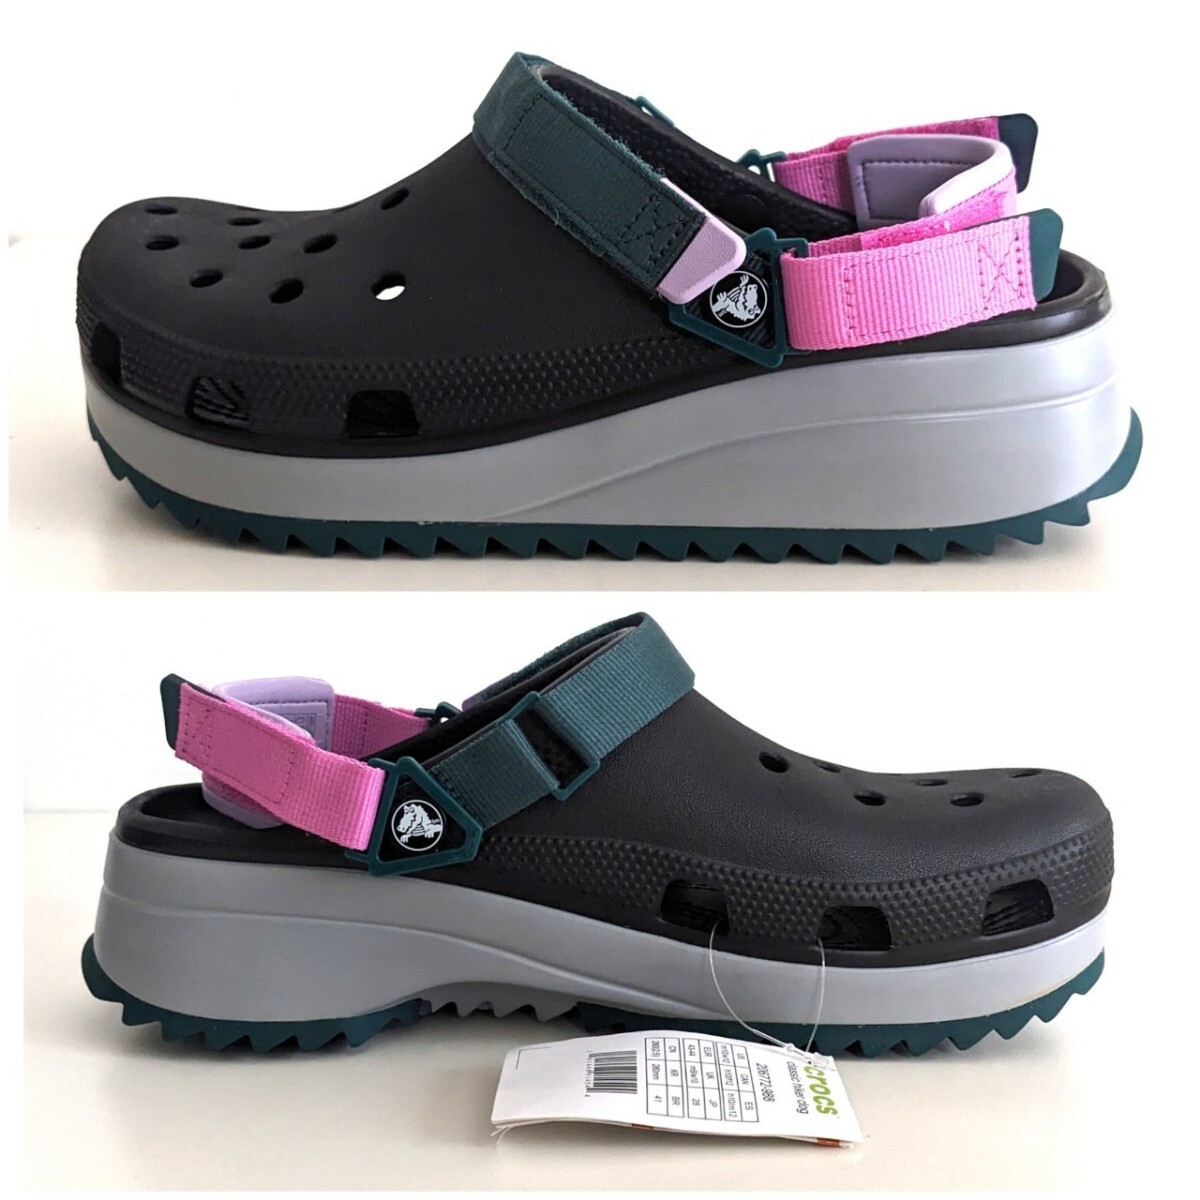  new goods * Crocs Classic Hiker Clog Classic high car clog thickness bottom sandals shoes outdoor camp black green pink black 28.